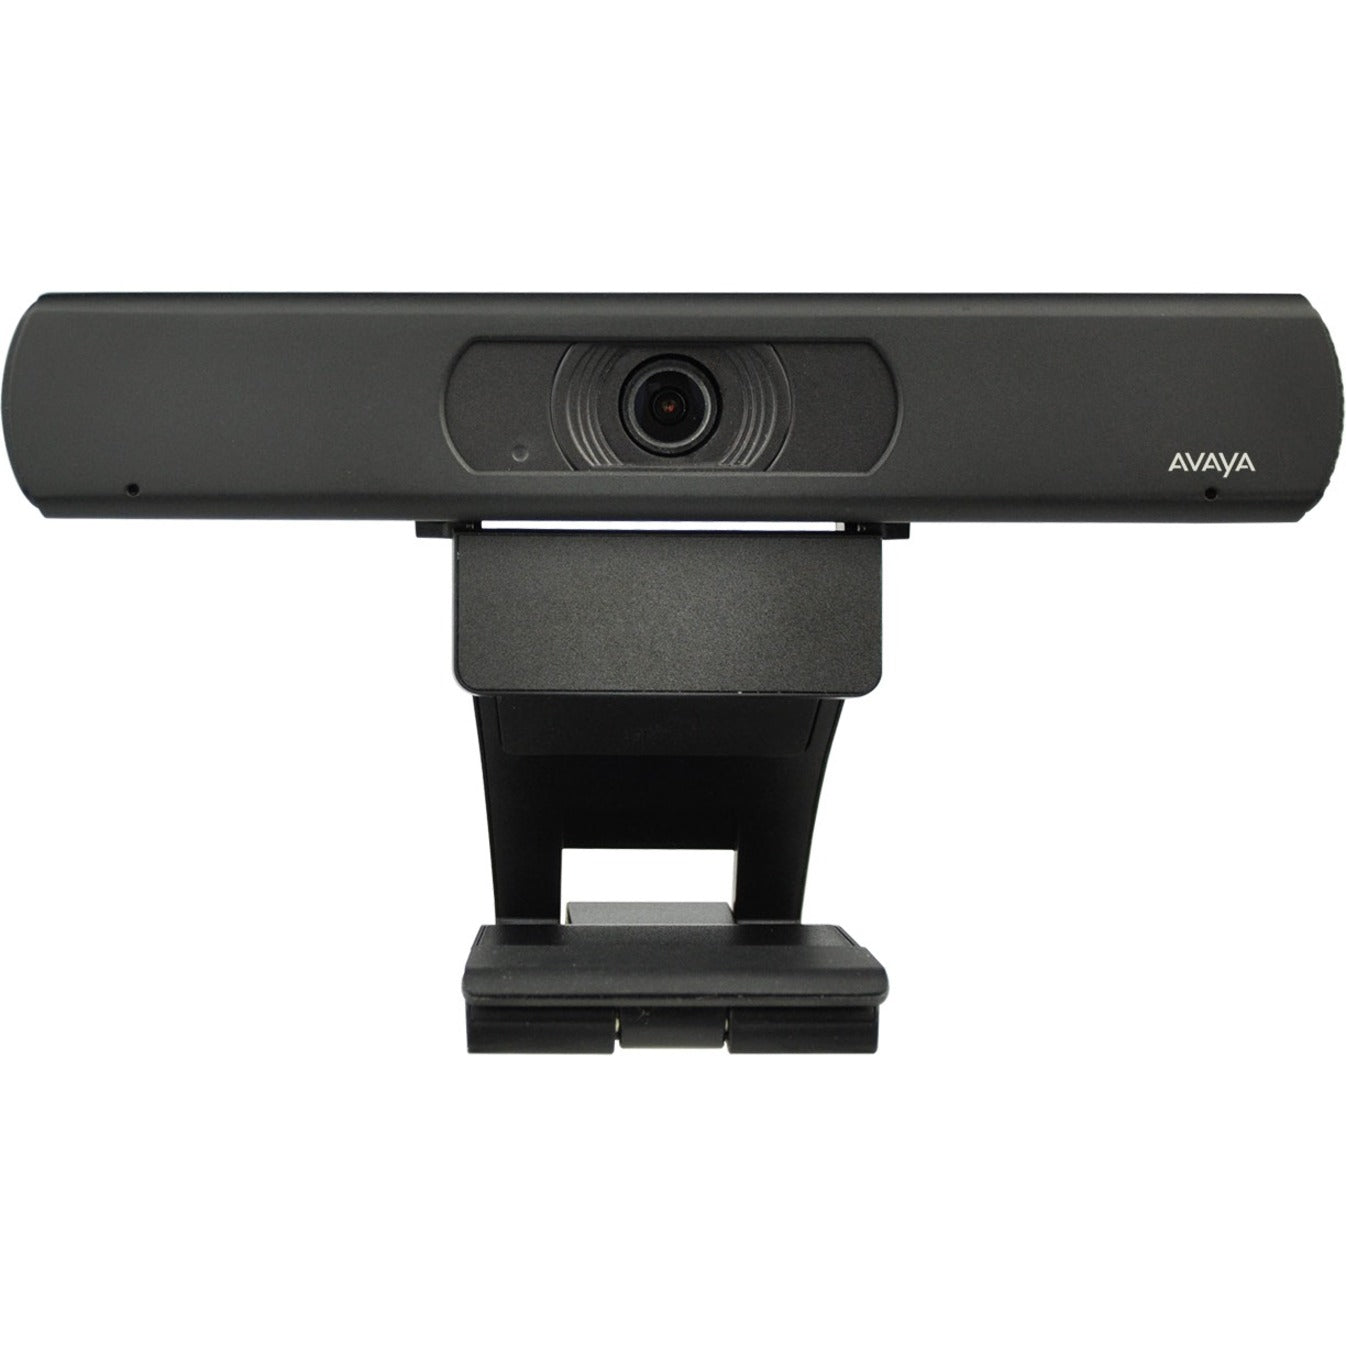 Avaya 700514534 HC020 Huddle Camera, 30 fps, USB Video Conferencing Camera